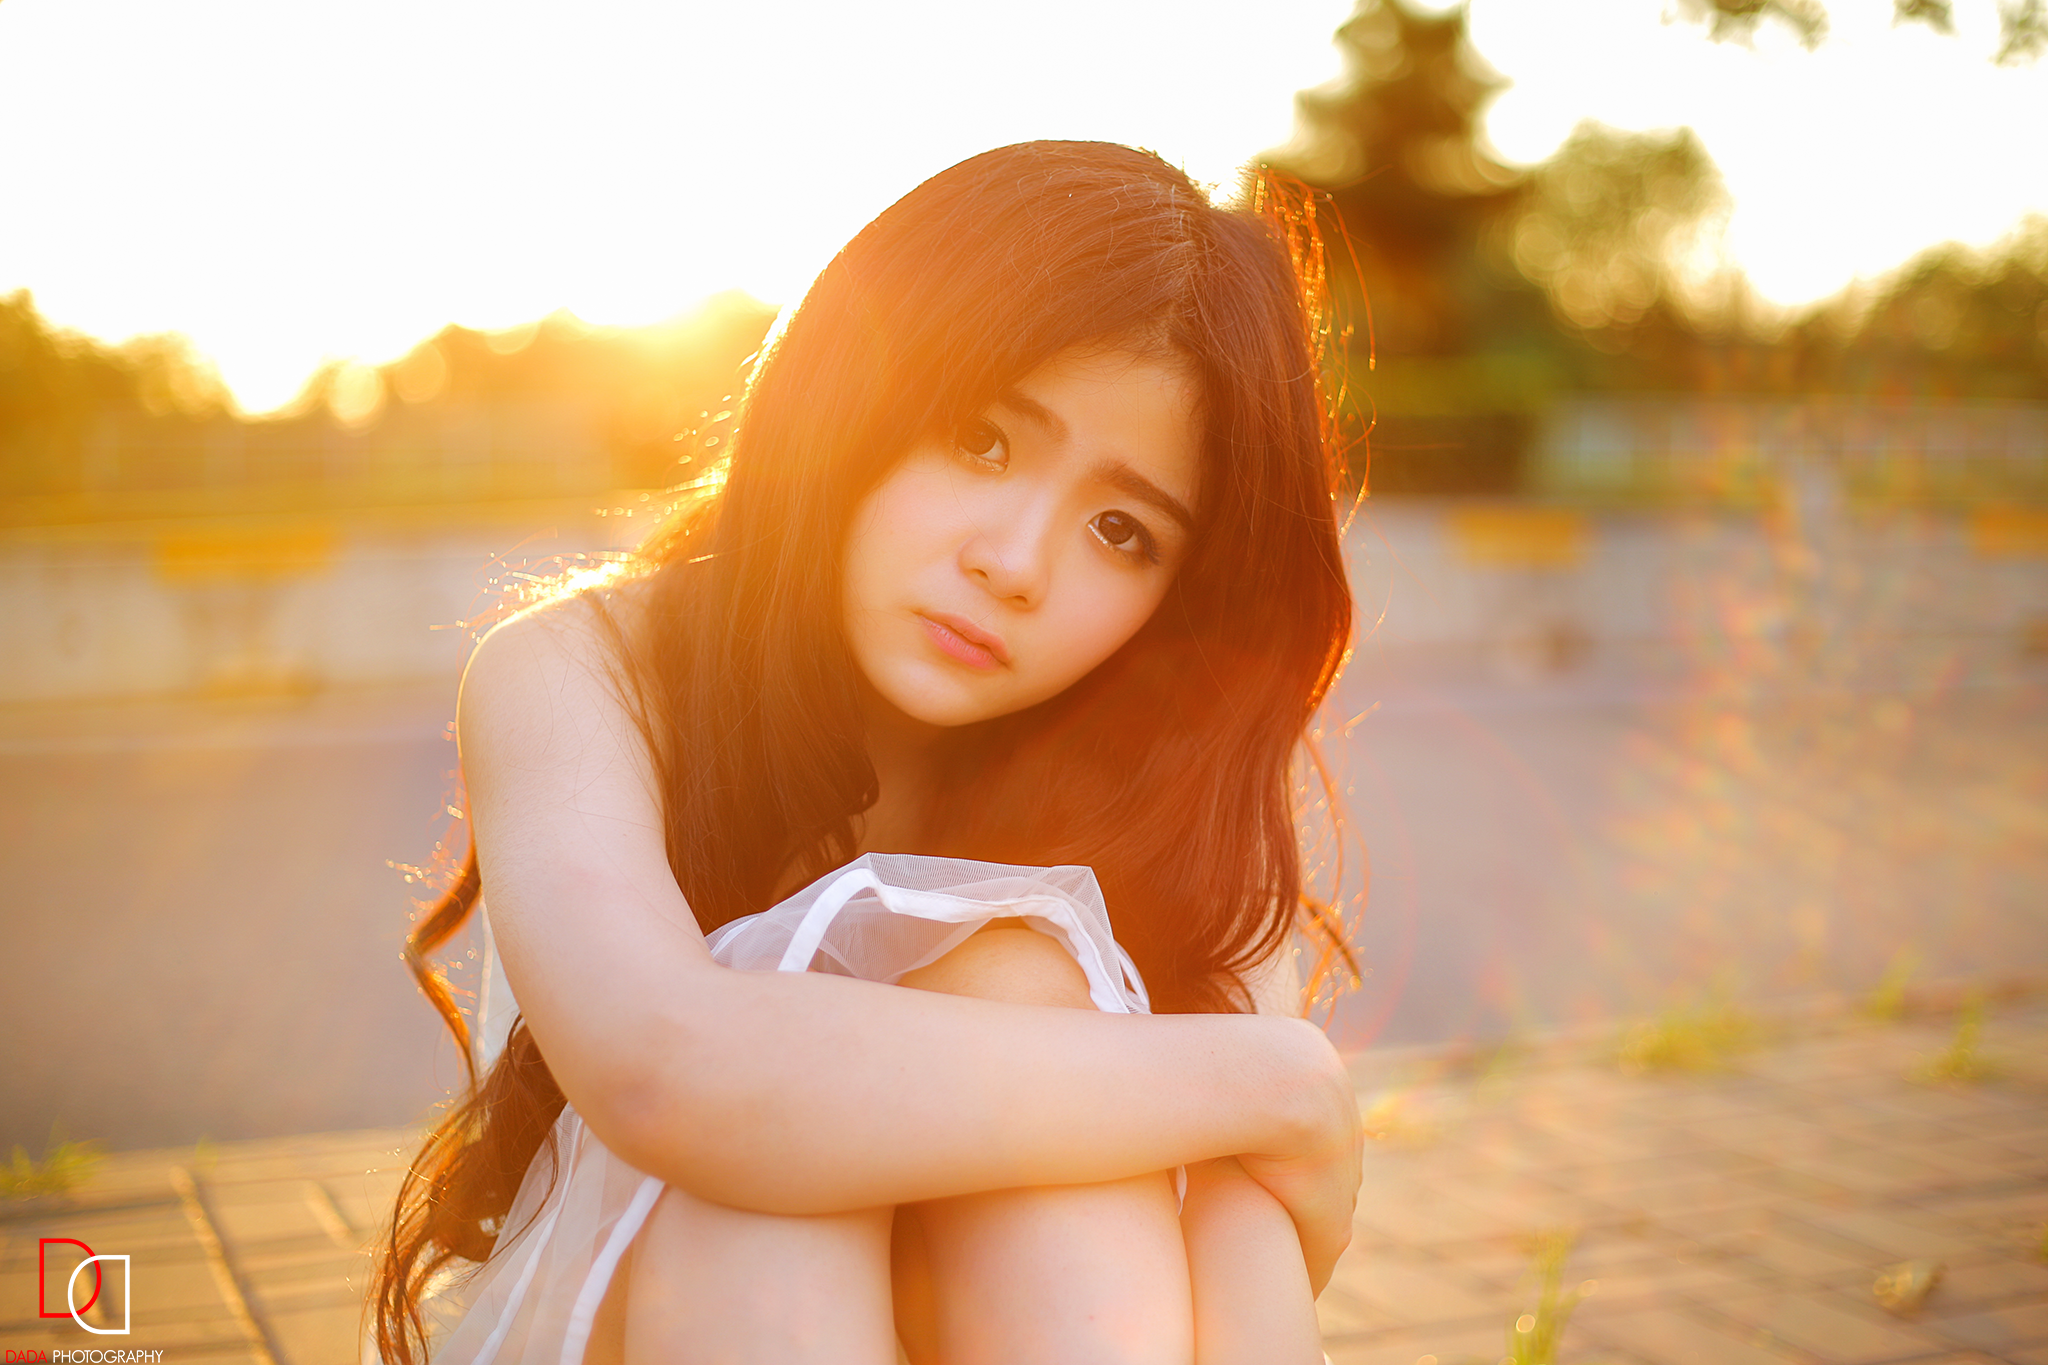 The Best Beautiful Asian Girl Wallpaper Full HD Free Download